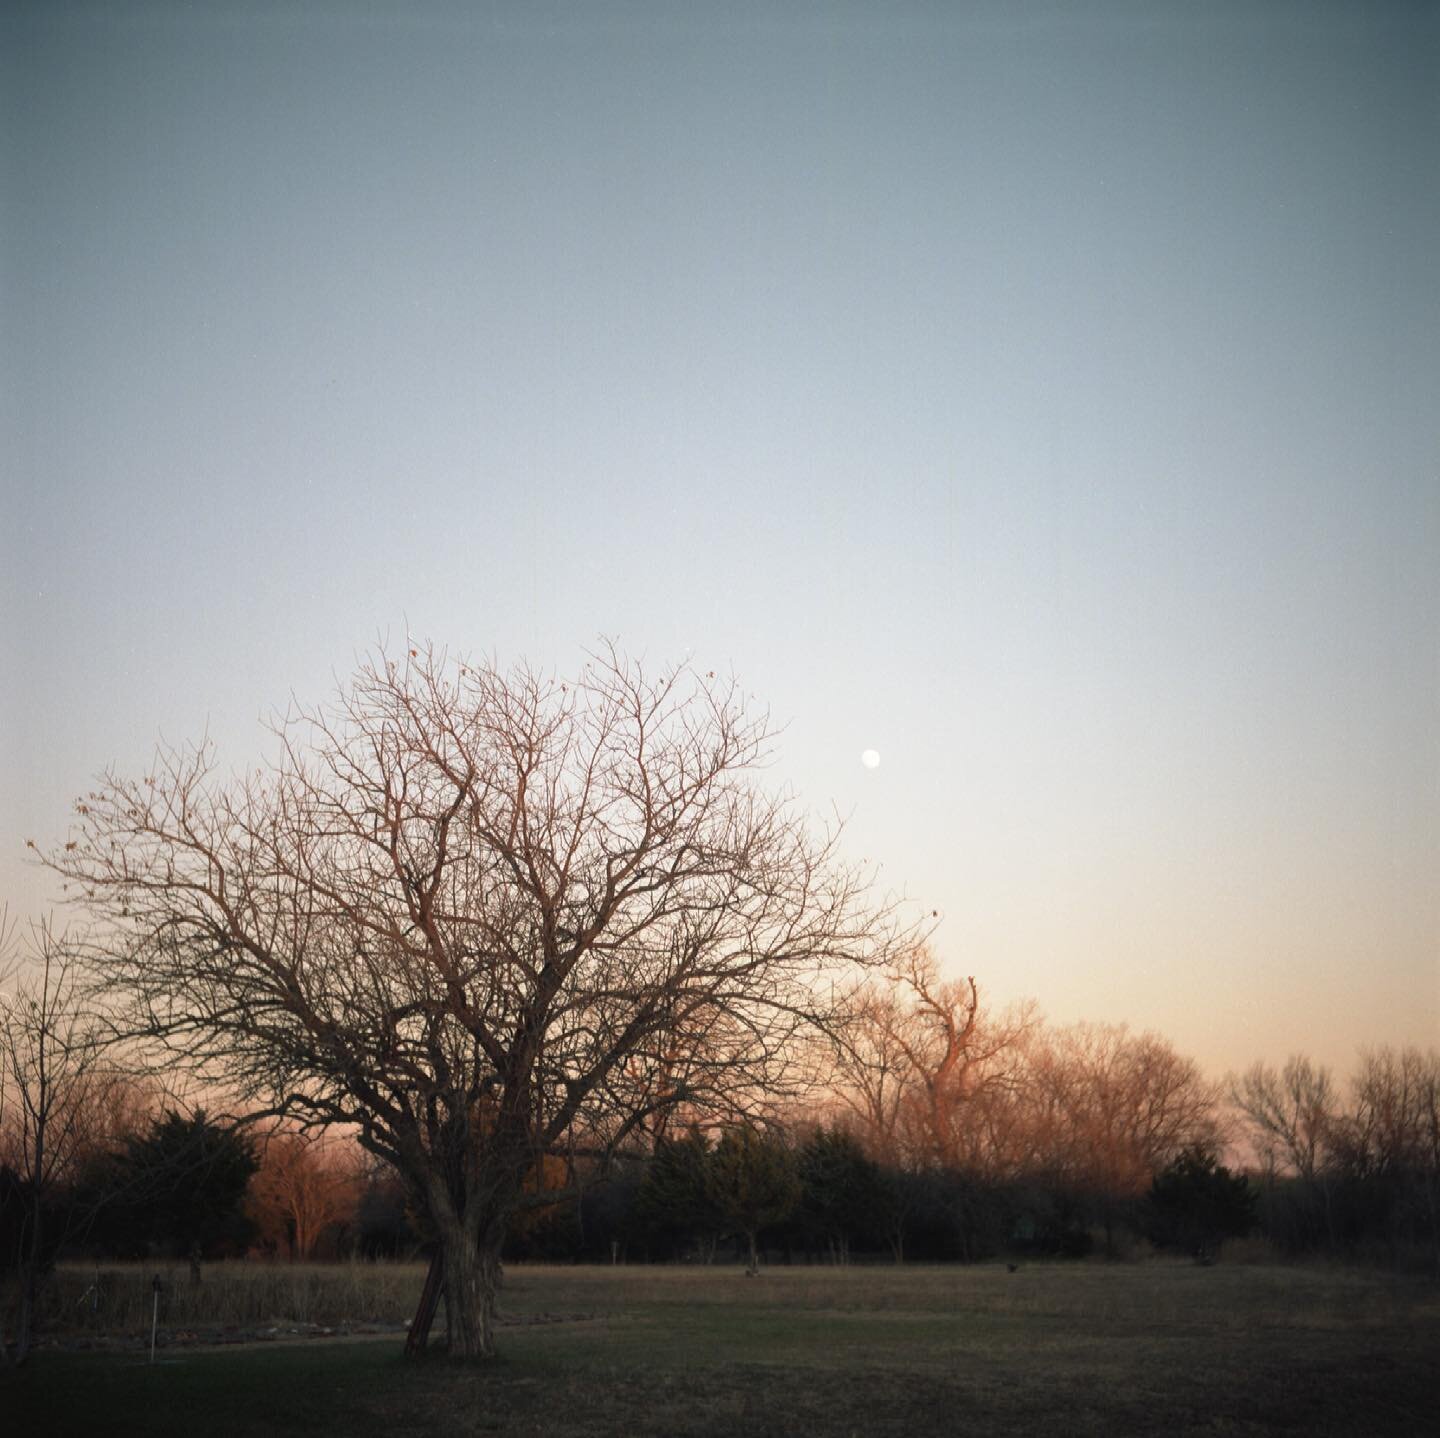 Moonrise in Wichita. 

Yashica-A, Kodak Portra 160
&mdash;
#sheshootsfilm #filmphotography #120mm #mediumformat #grainisgood #ourmomentum #subjectivelyobjective #filmphotomagazine #boxspeedfeature #microlandscape